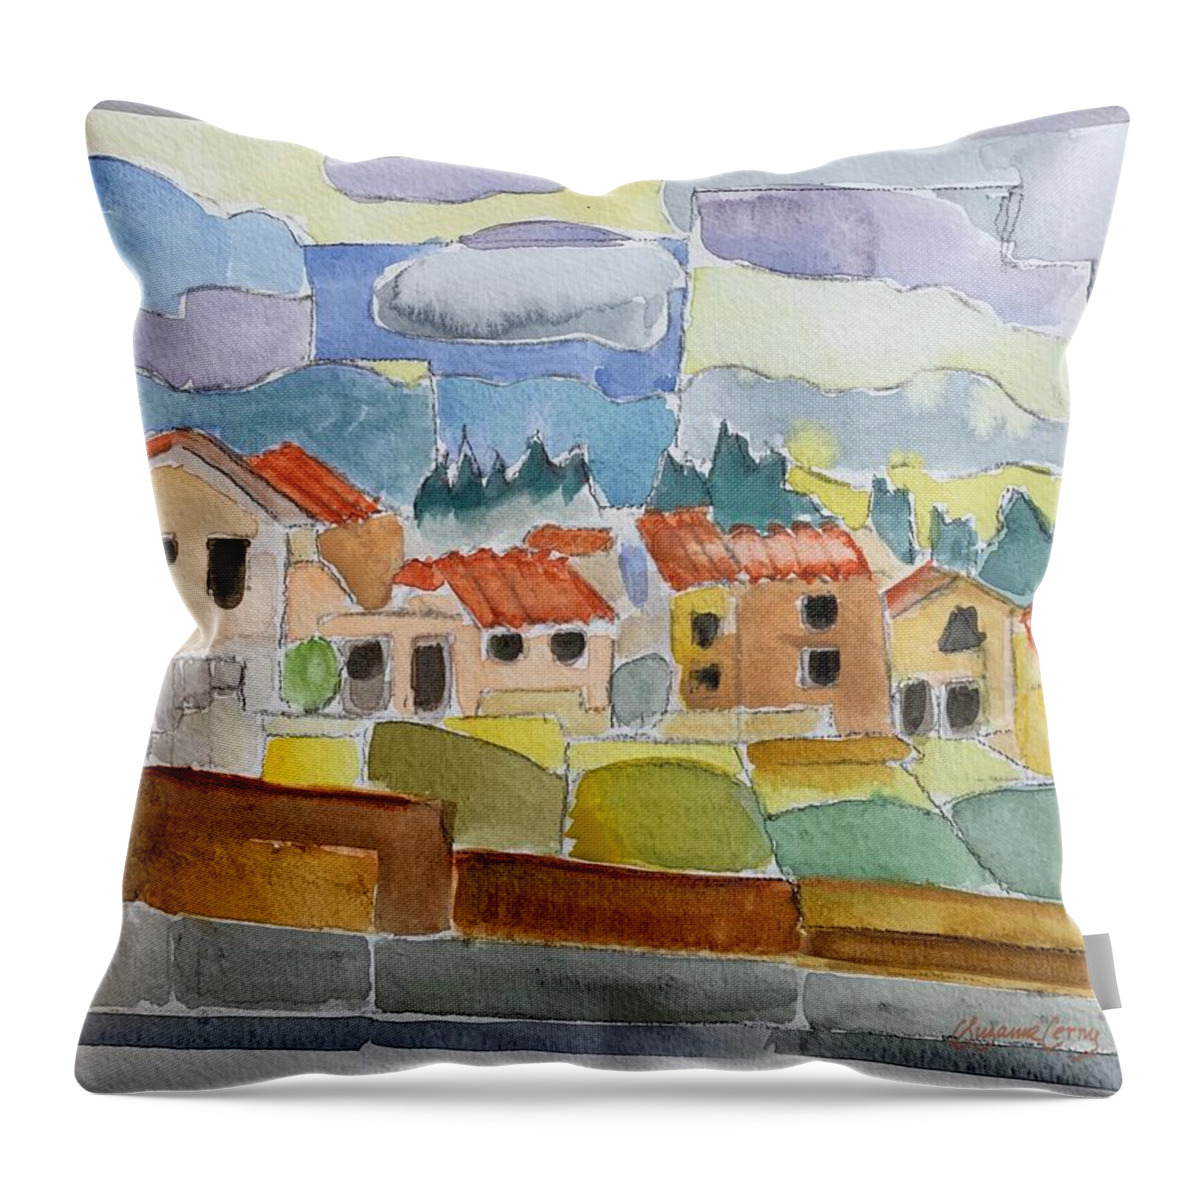 Laguna Del Sol Throw Pillow featuring the painting Laguna del Sol Houses Design by Suzanne Giuriati Cerny